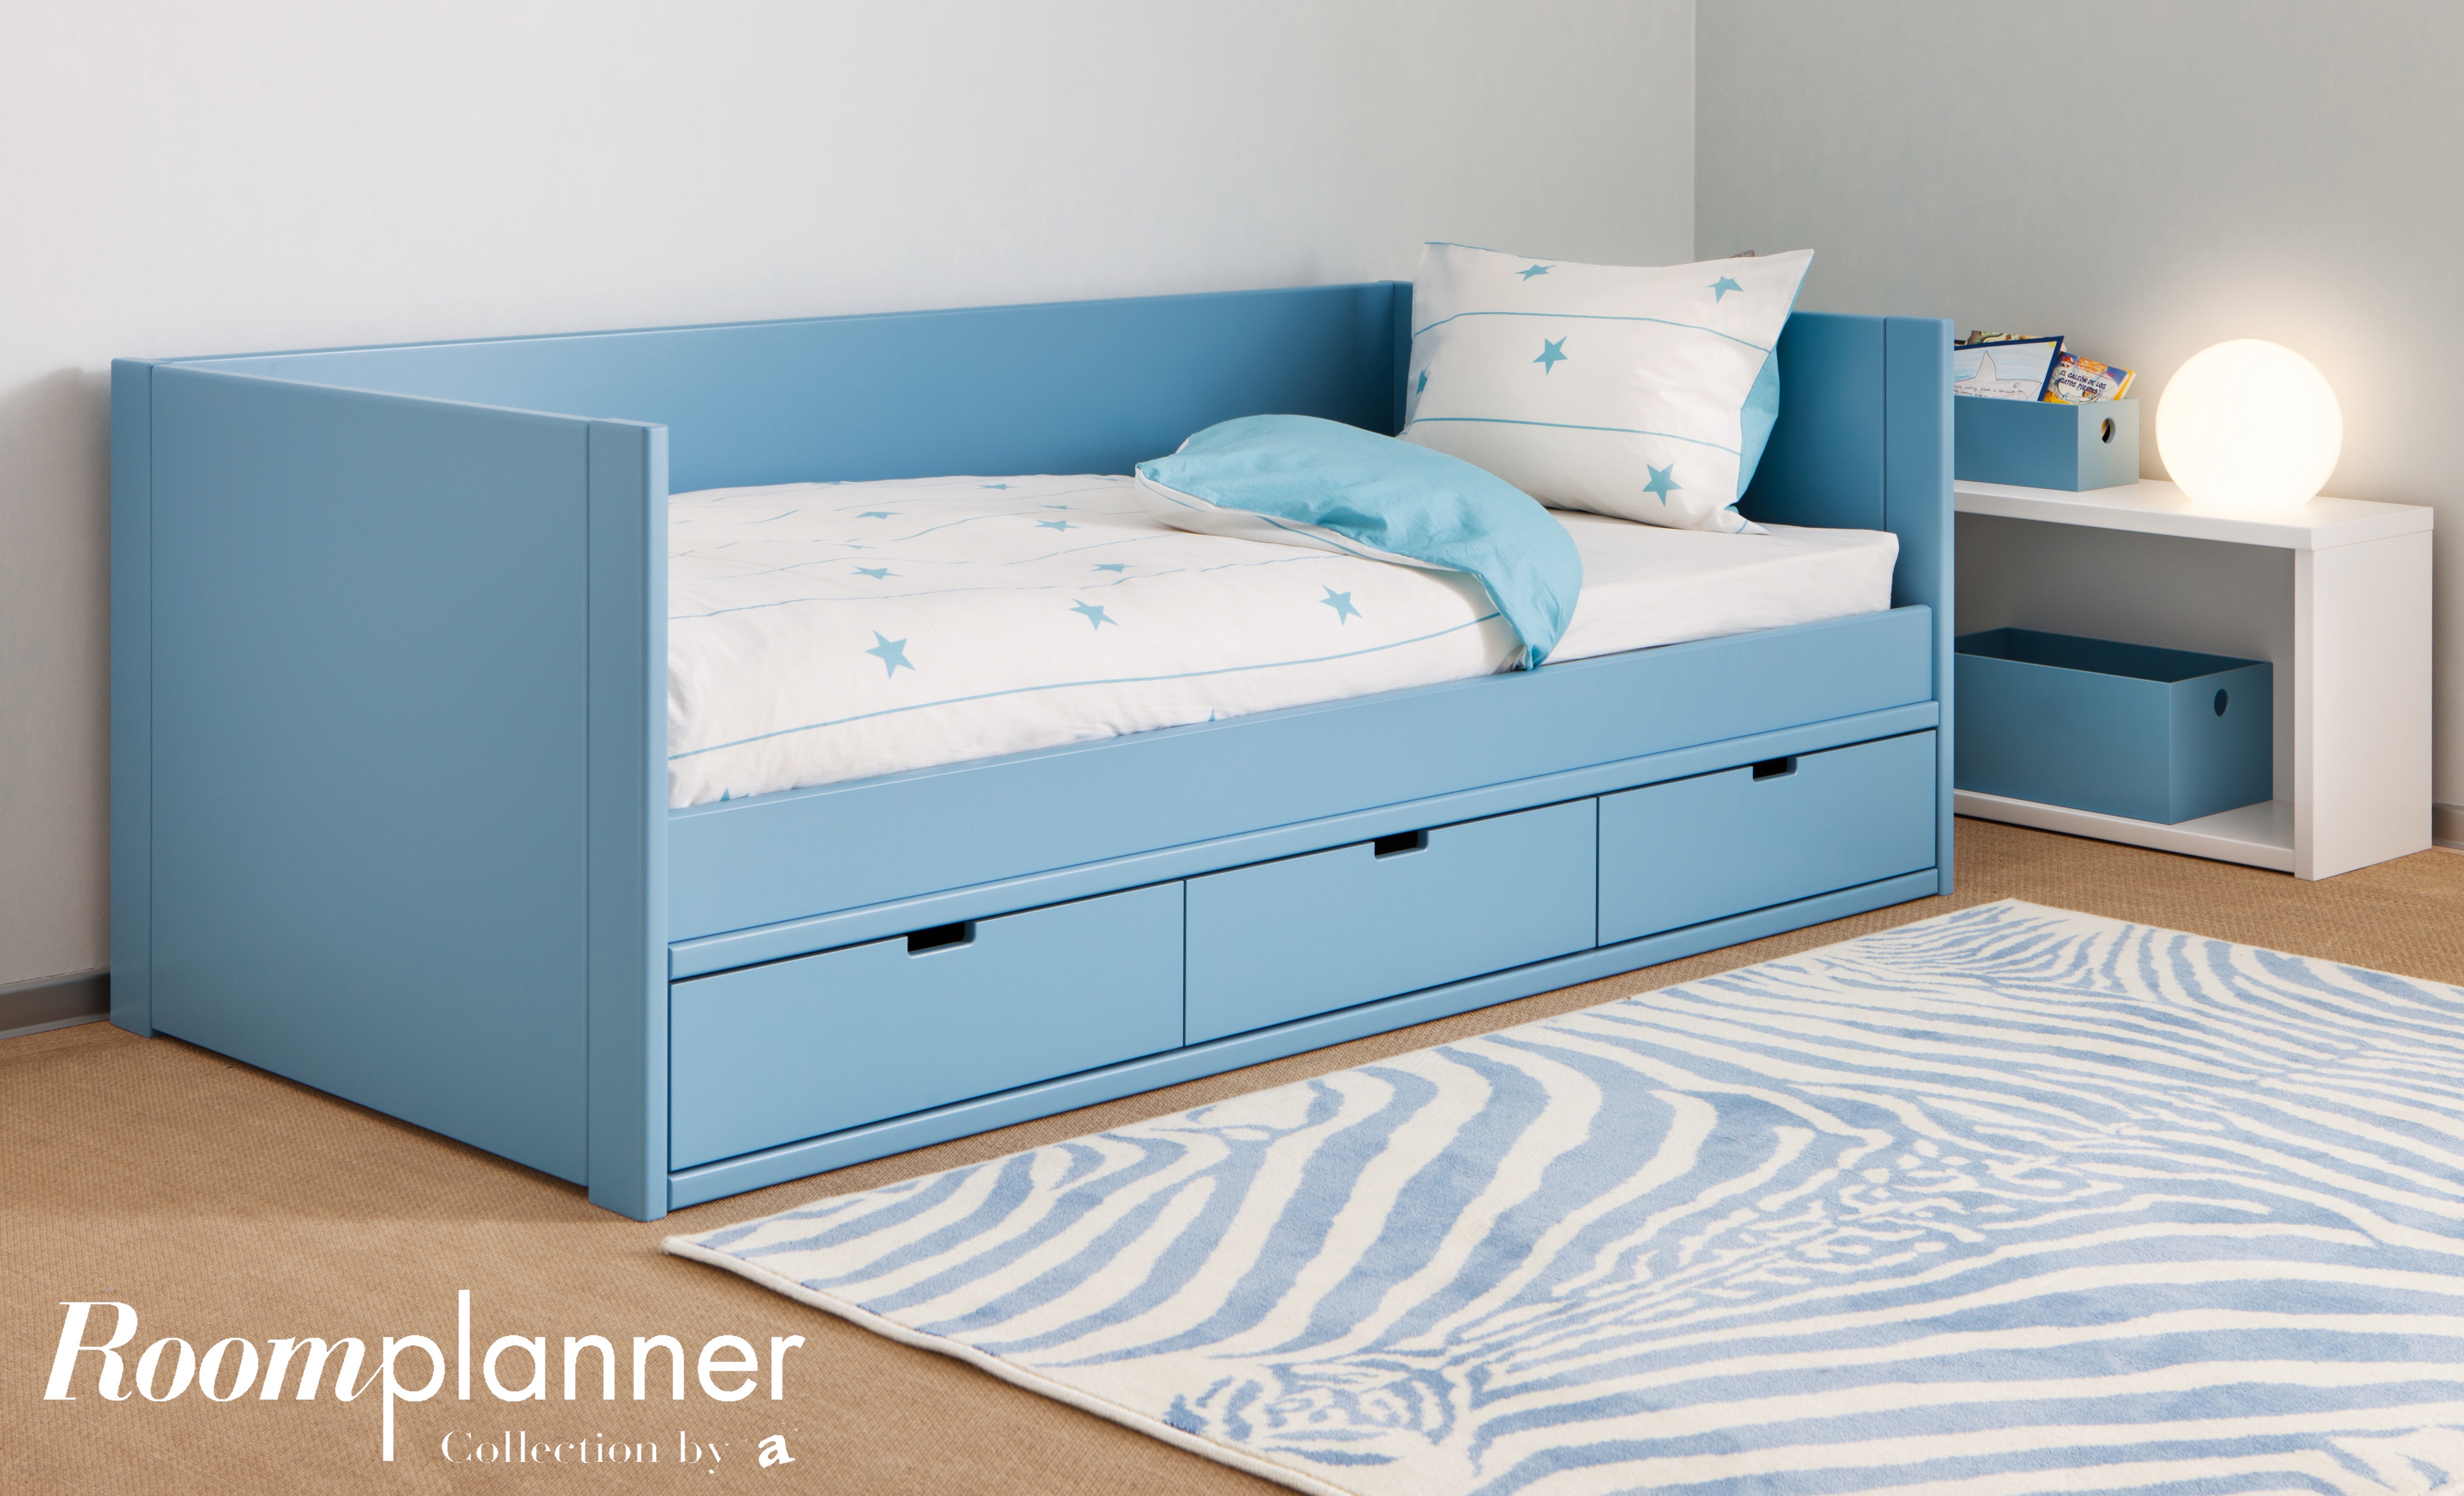 Asoral Design Bedroom For Children And Teenager Design Bed With